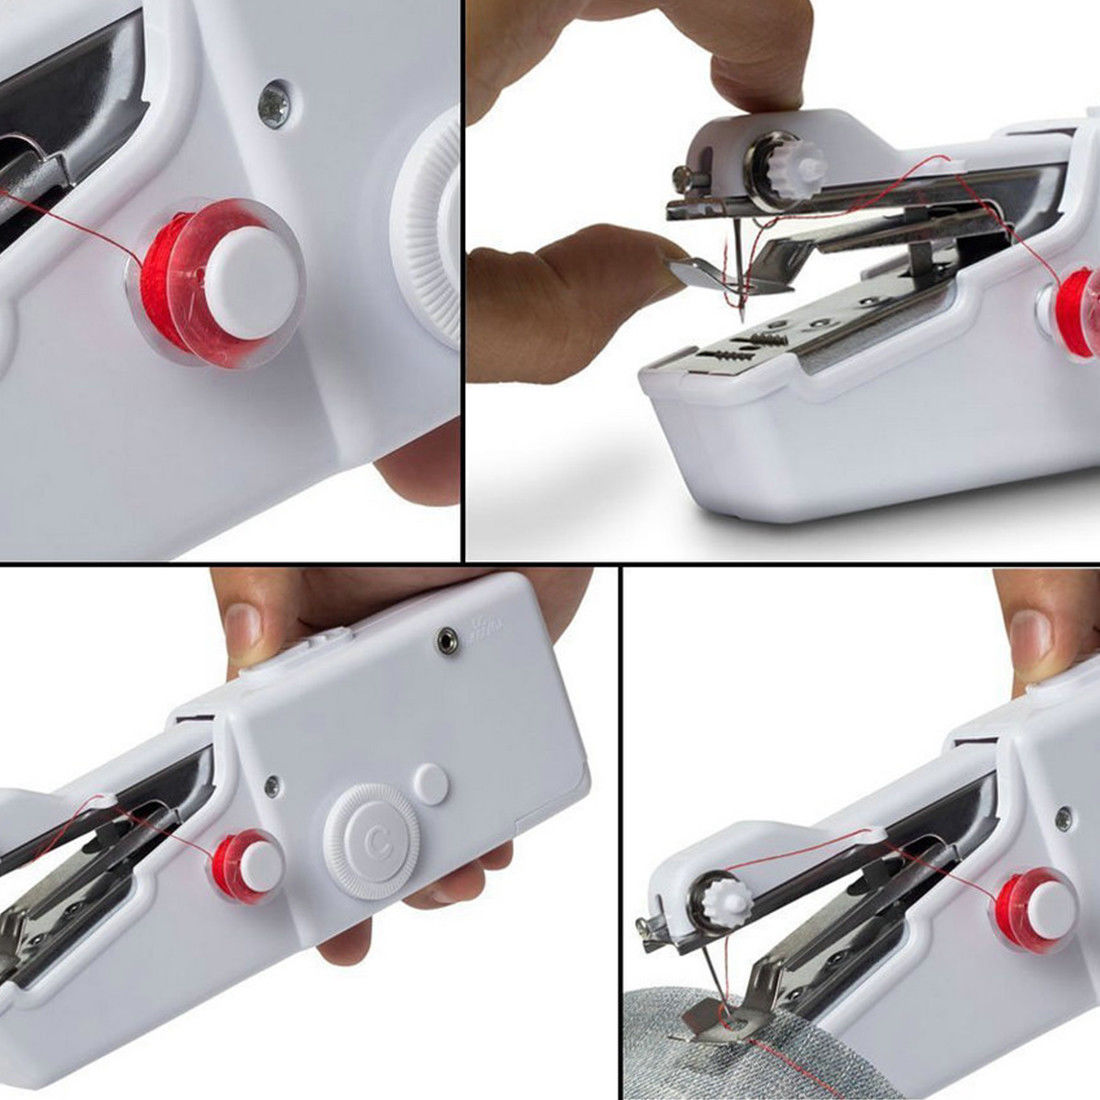 Handy Stitch Handheld Sewing Machine freeshipping - Dealz4all Store